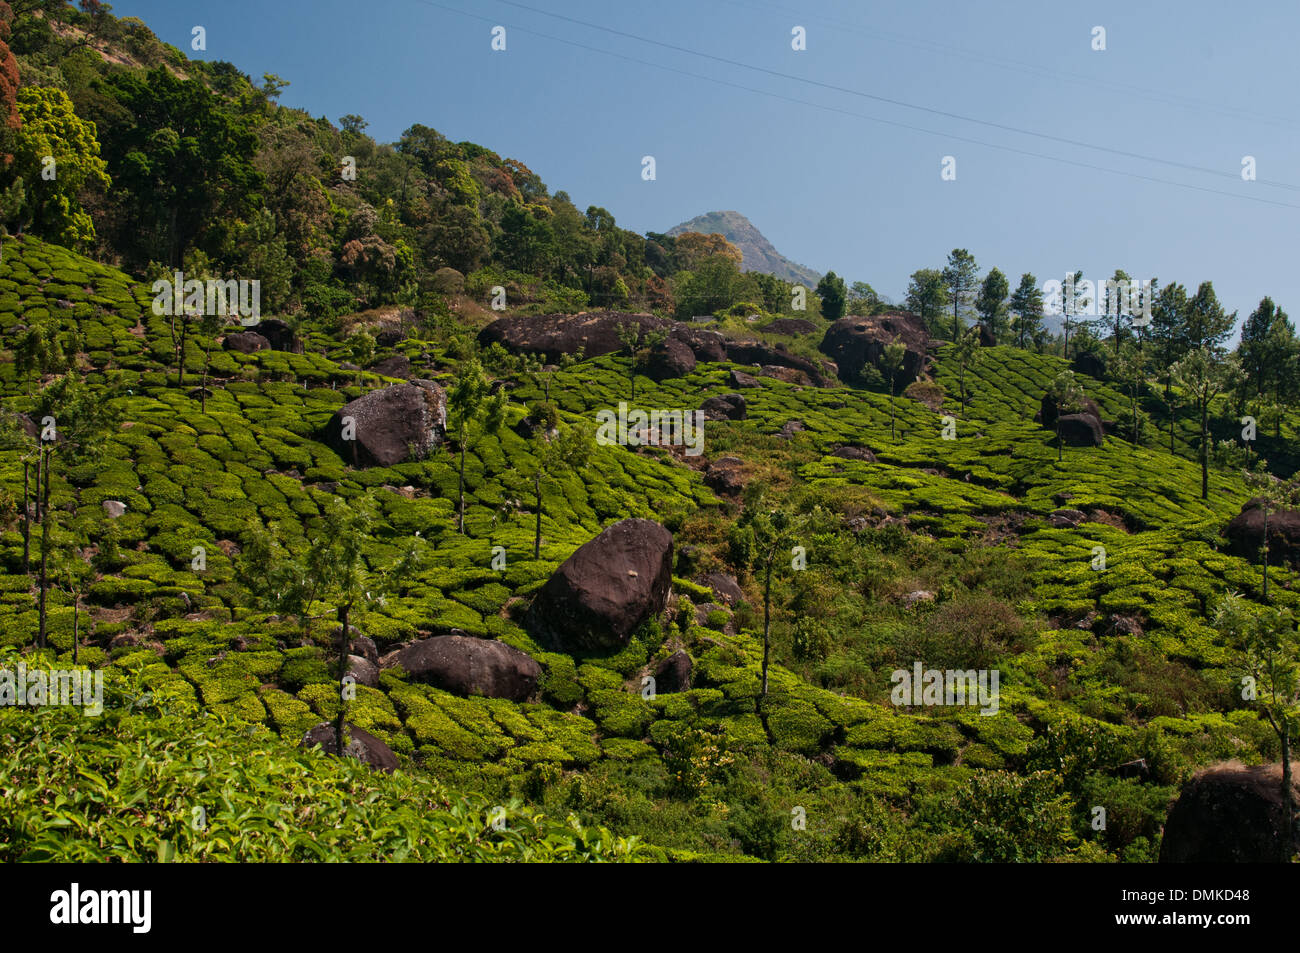 The tea plantations of Munnar, Kerala, India. Stock Photo